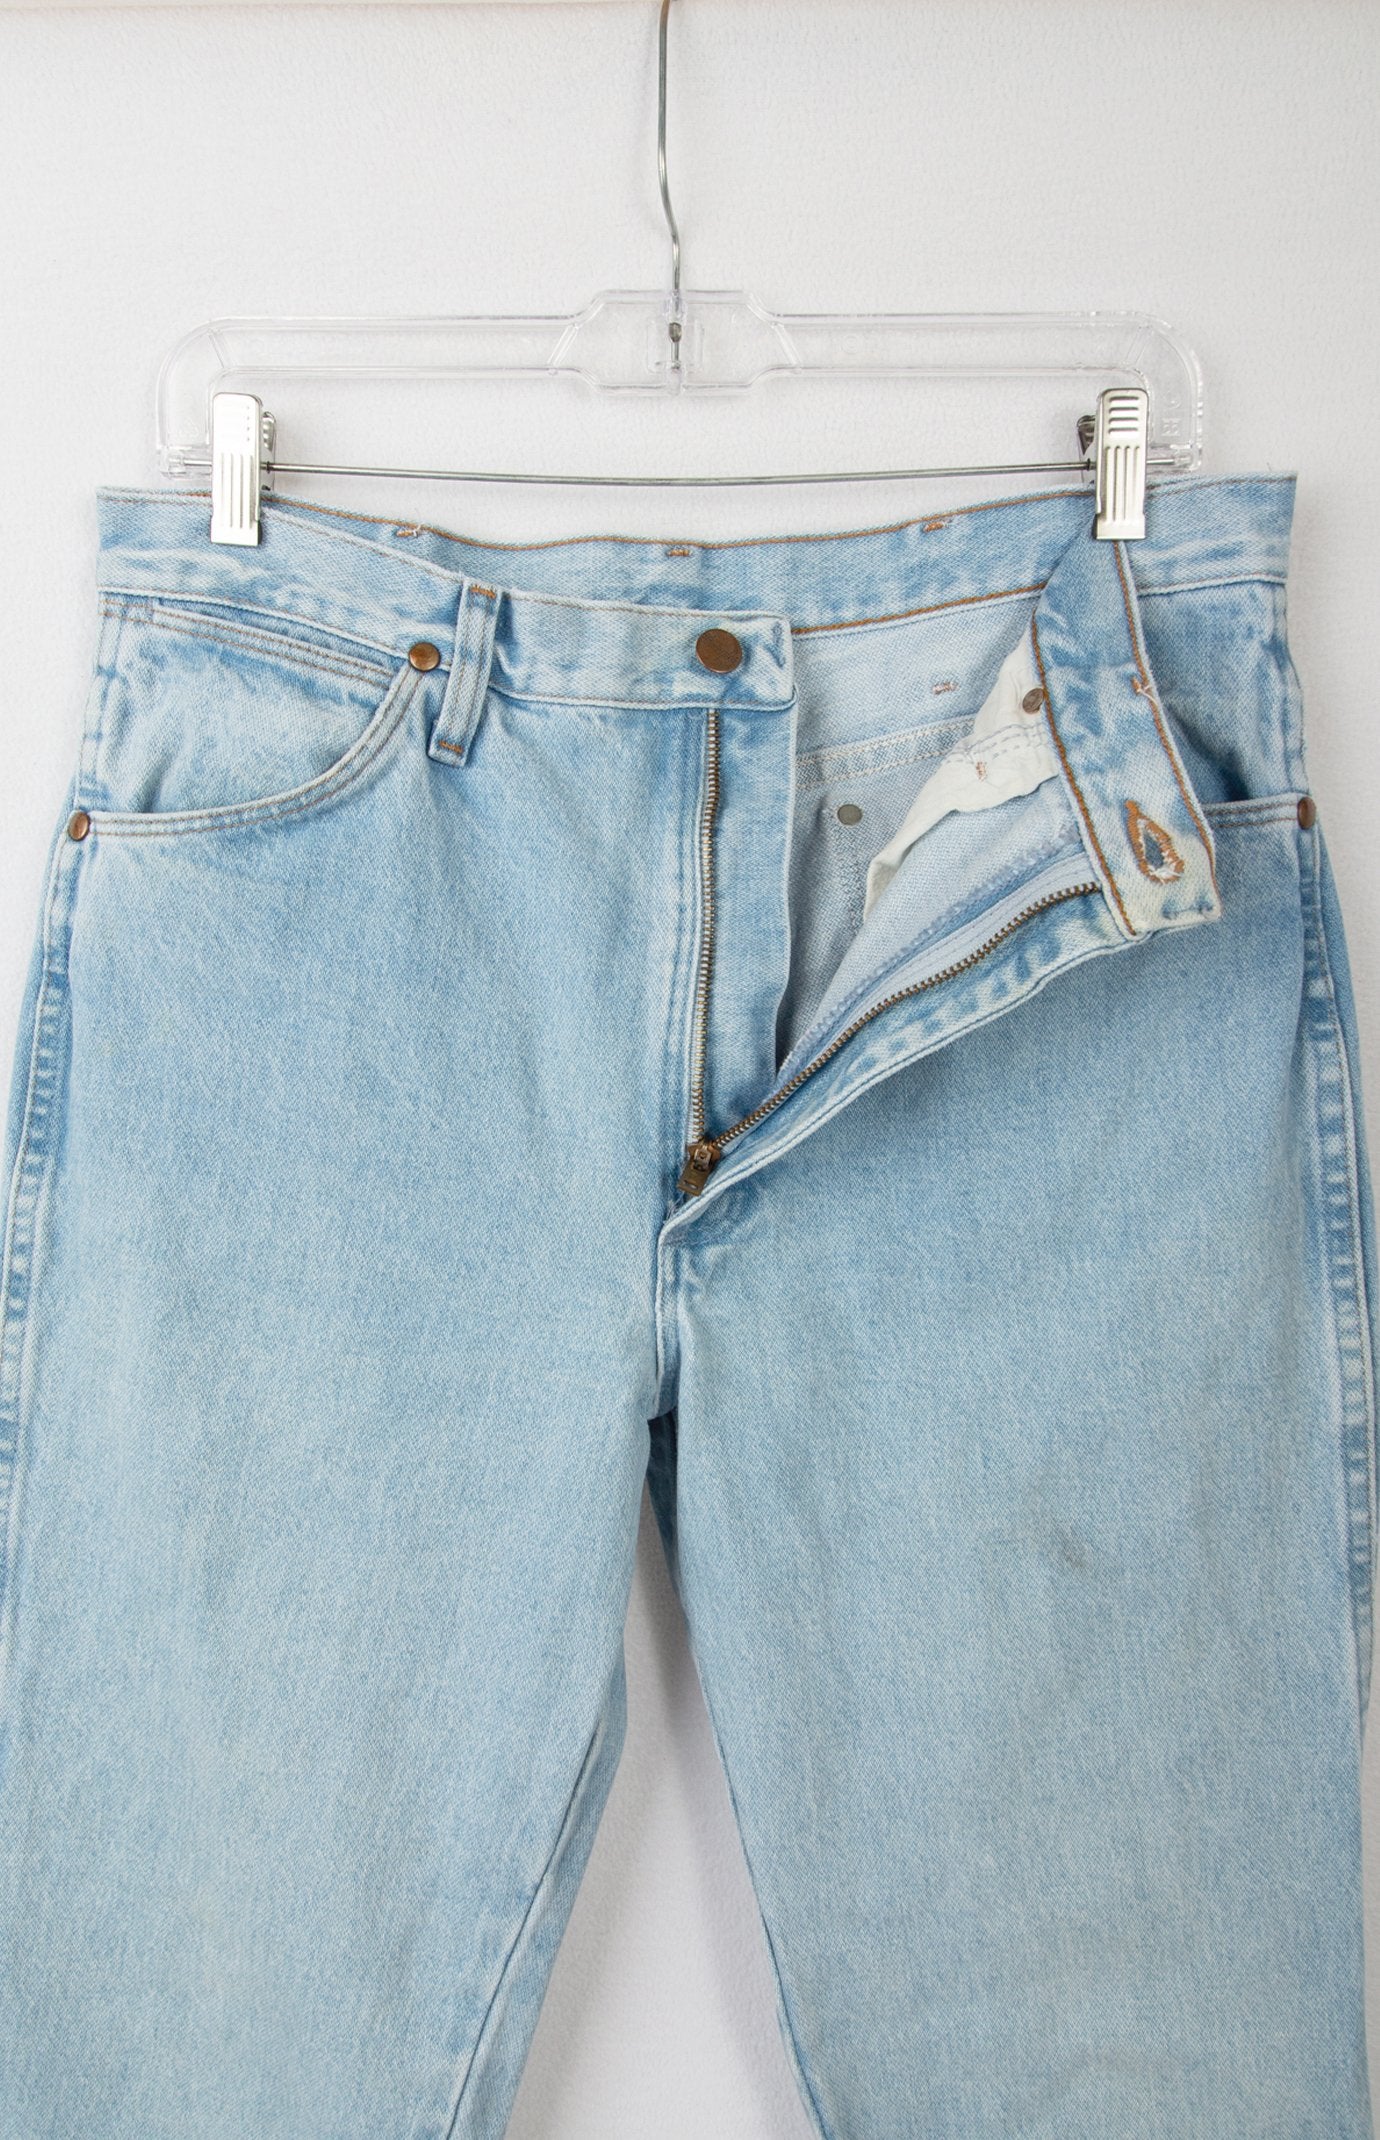 Buy Vintage Wrangler Jeans, Wrangler Denim, Distressed Boyfriend Jeans  Online in India - Etsy